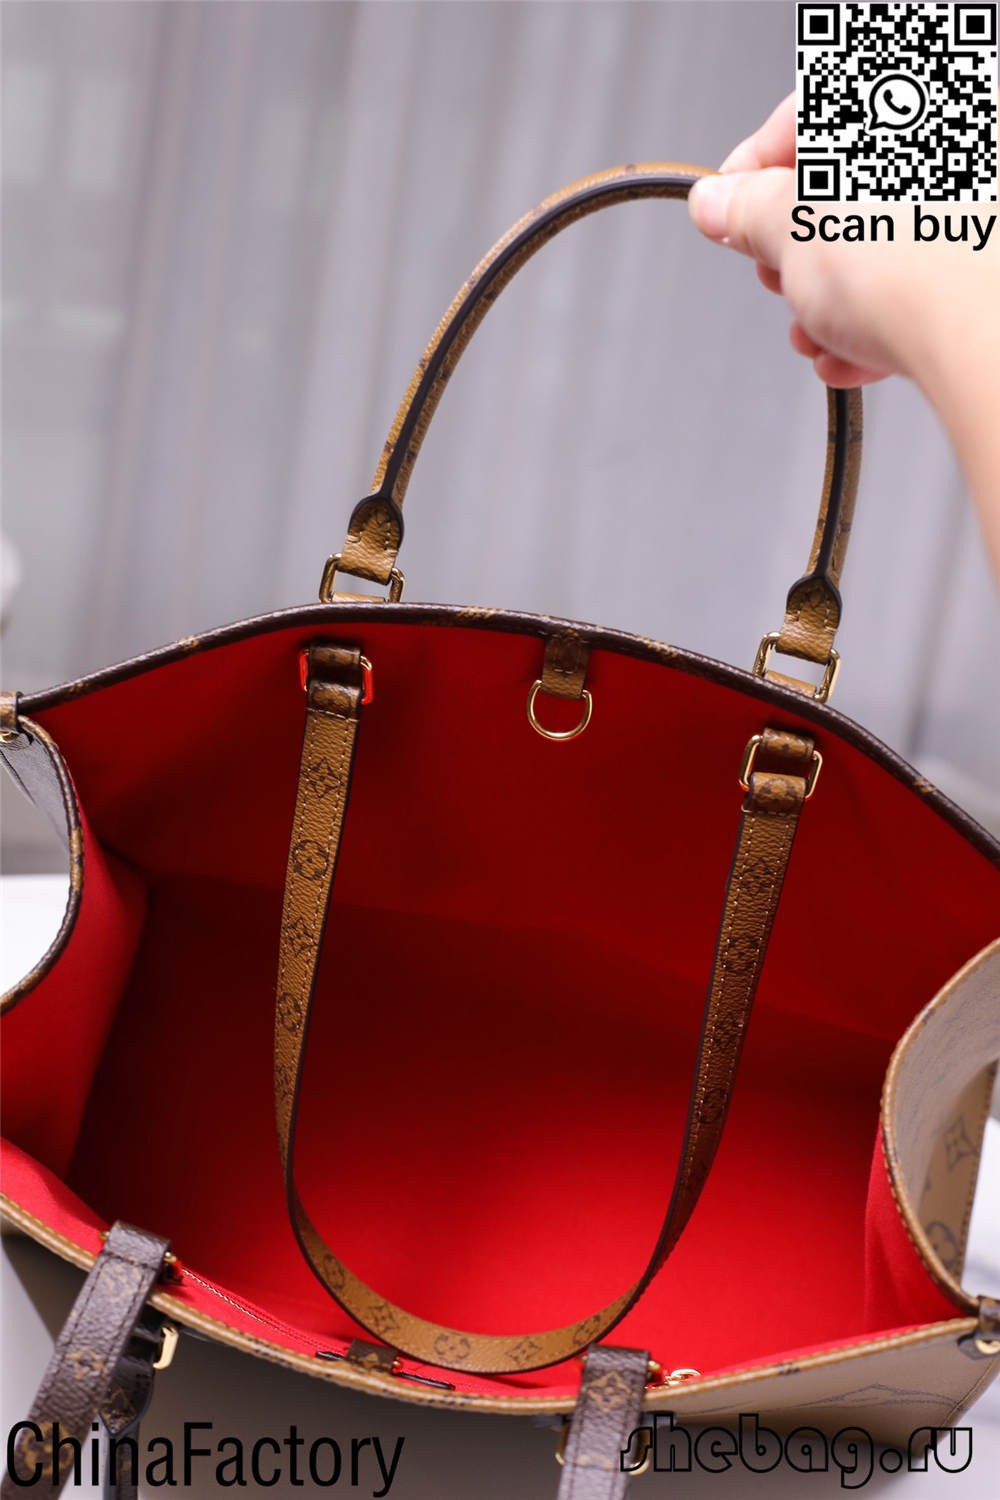 Koop Louis Vuitton jeff Koons replica tas uk (2022 laatste)-Beste kwaliteit nep Louis Vuitton tas online winkel, Replica designer tas ru